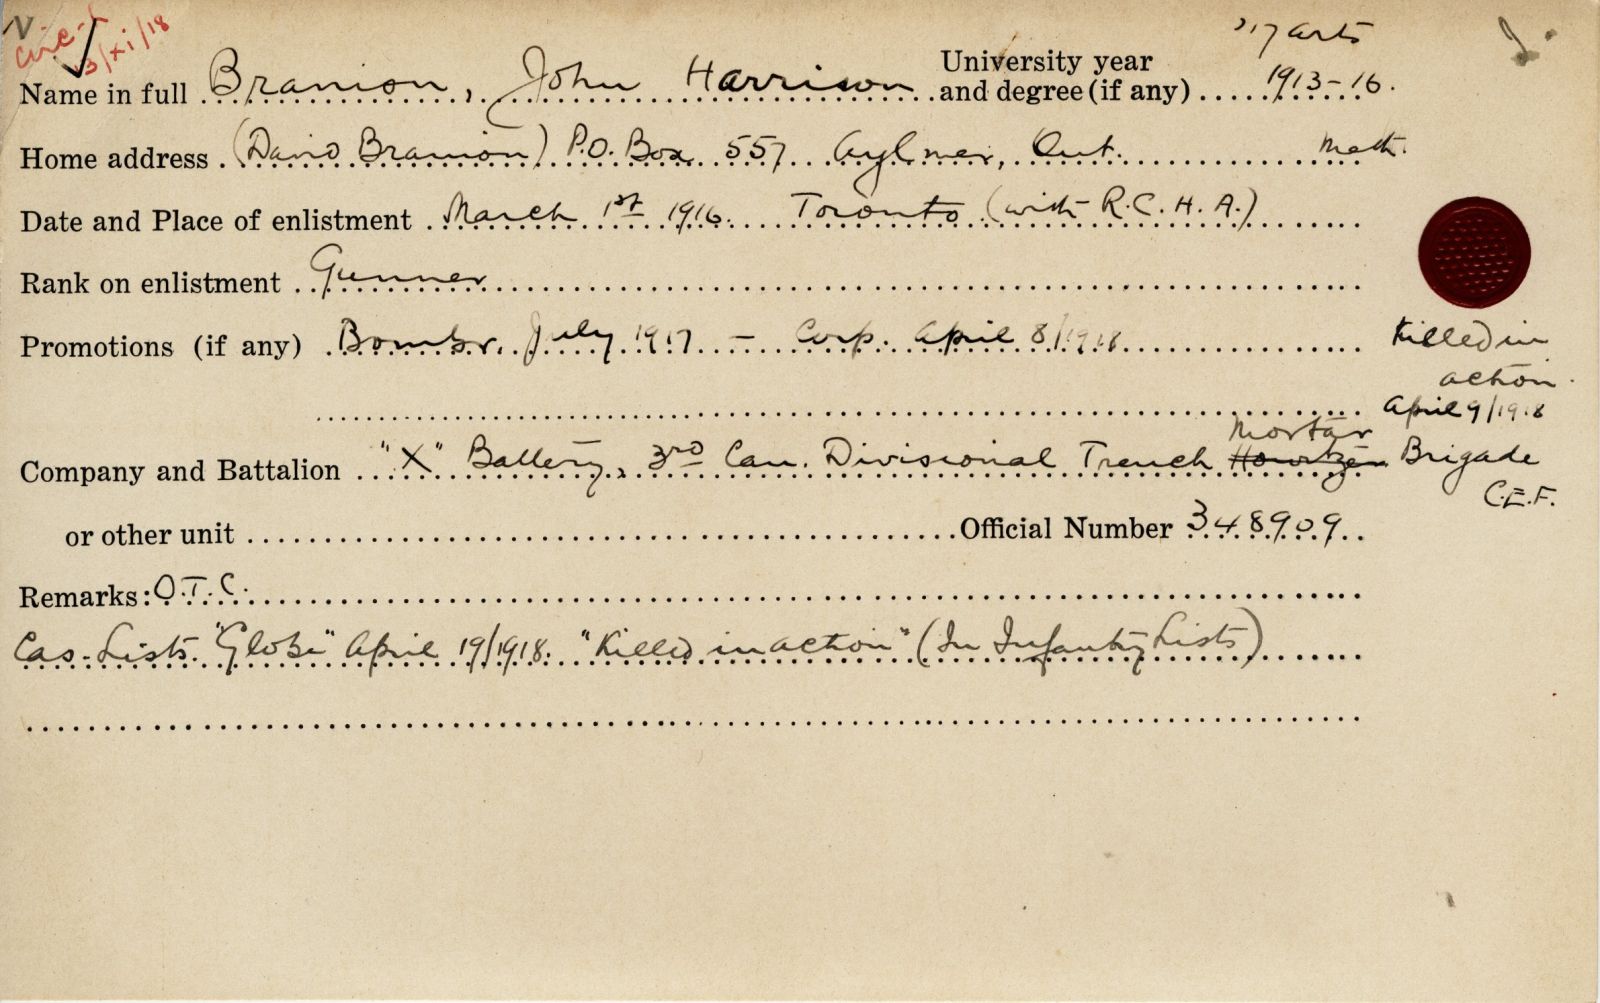 University Military Record of Branion